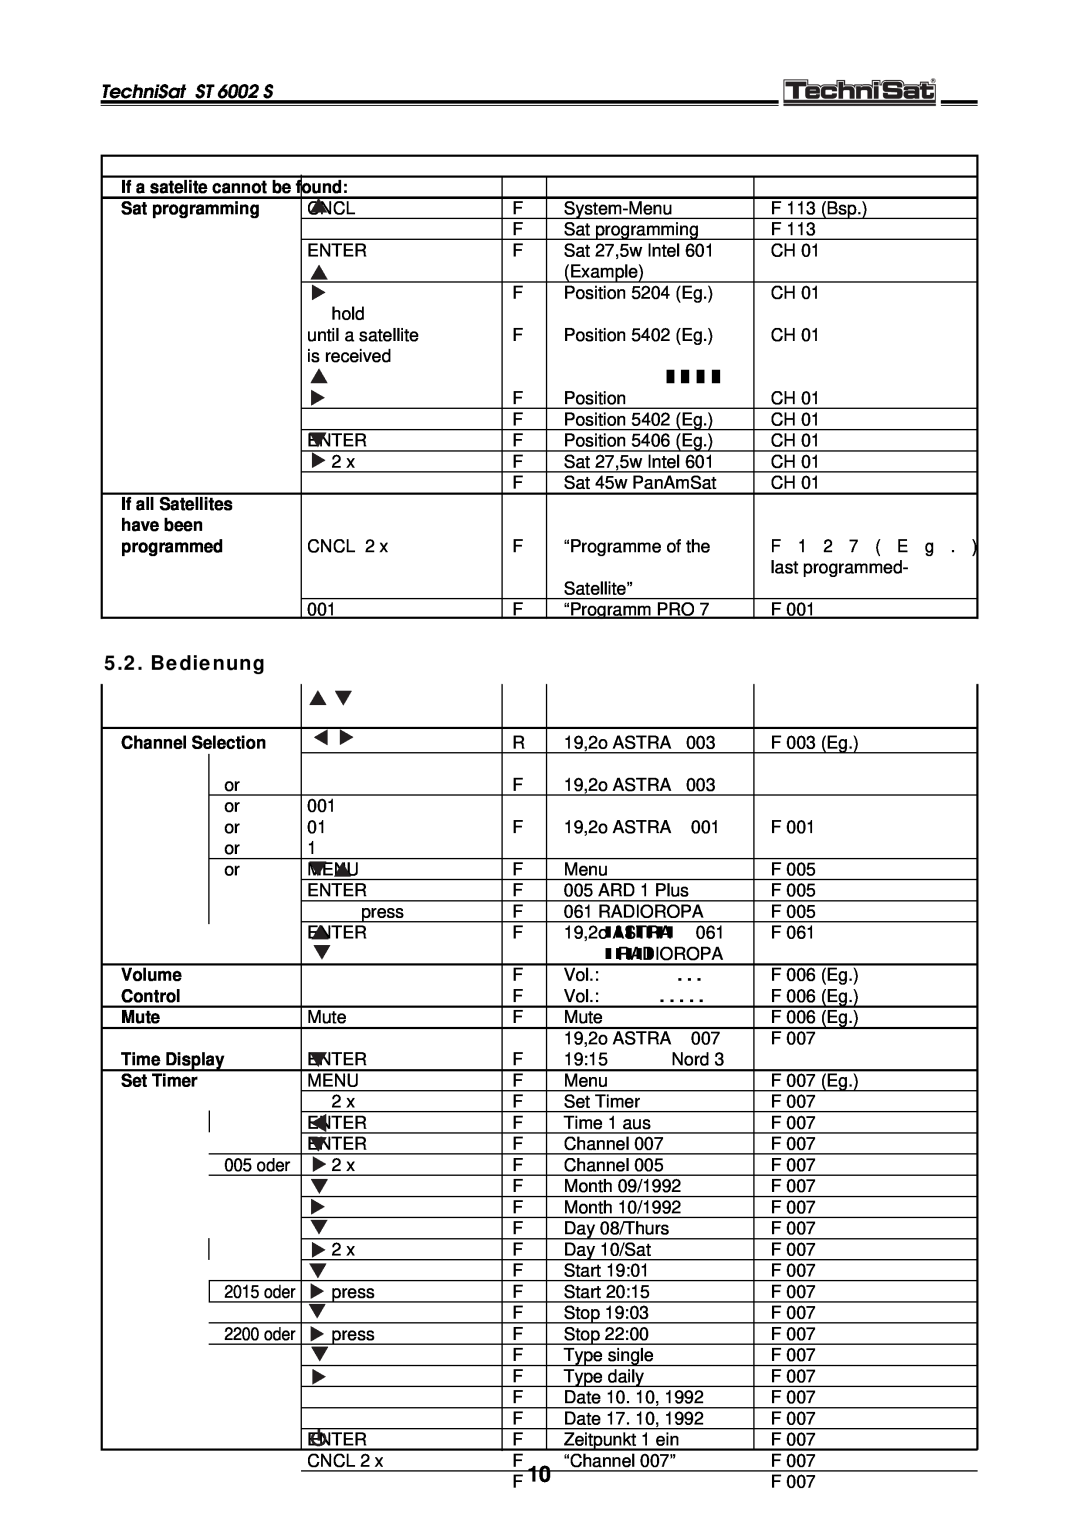 TechniSat manual Bedienung, TechniSat ST 6002 S 